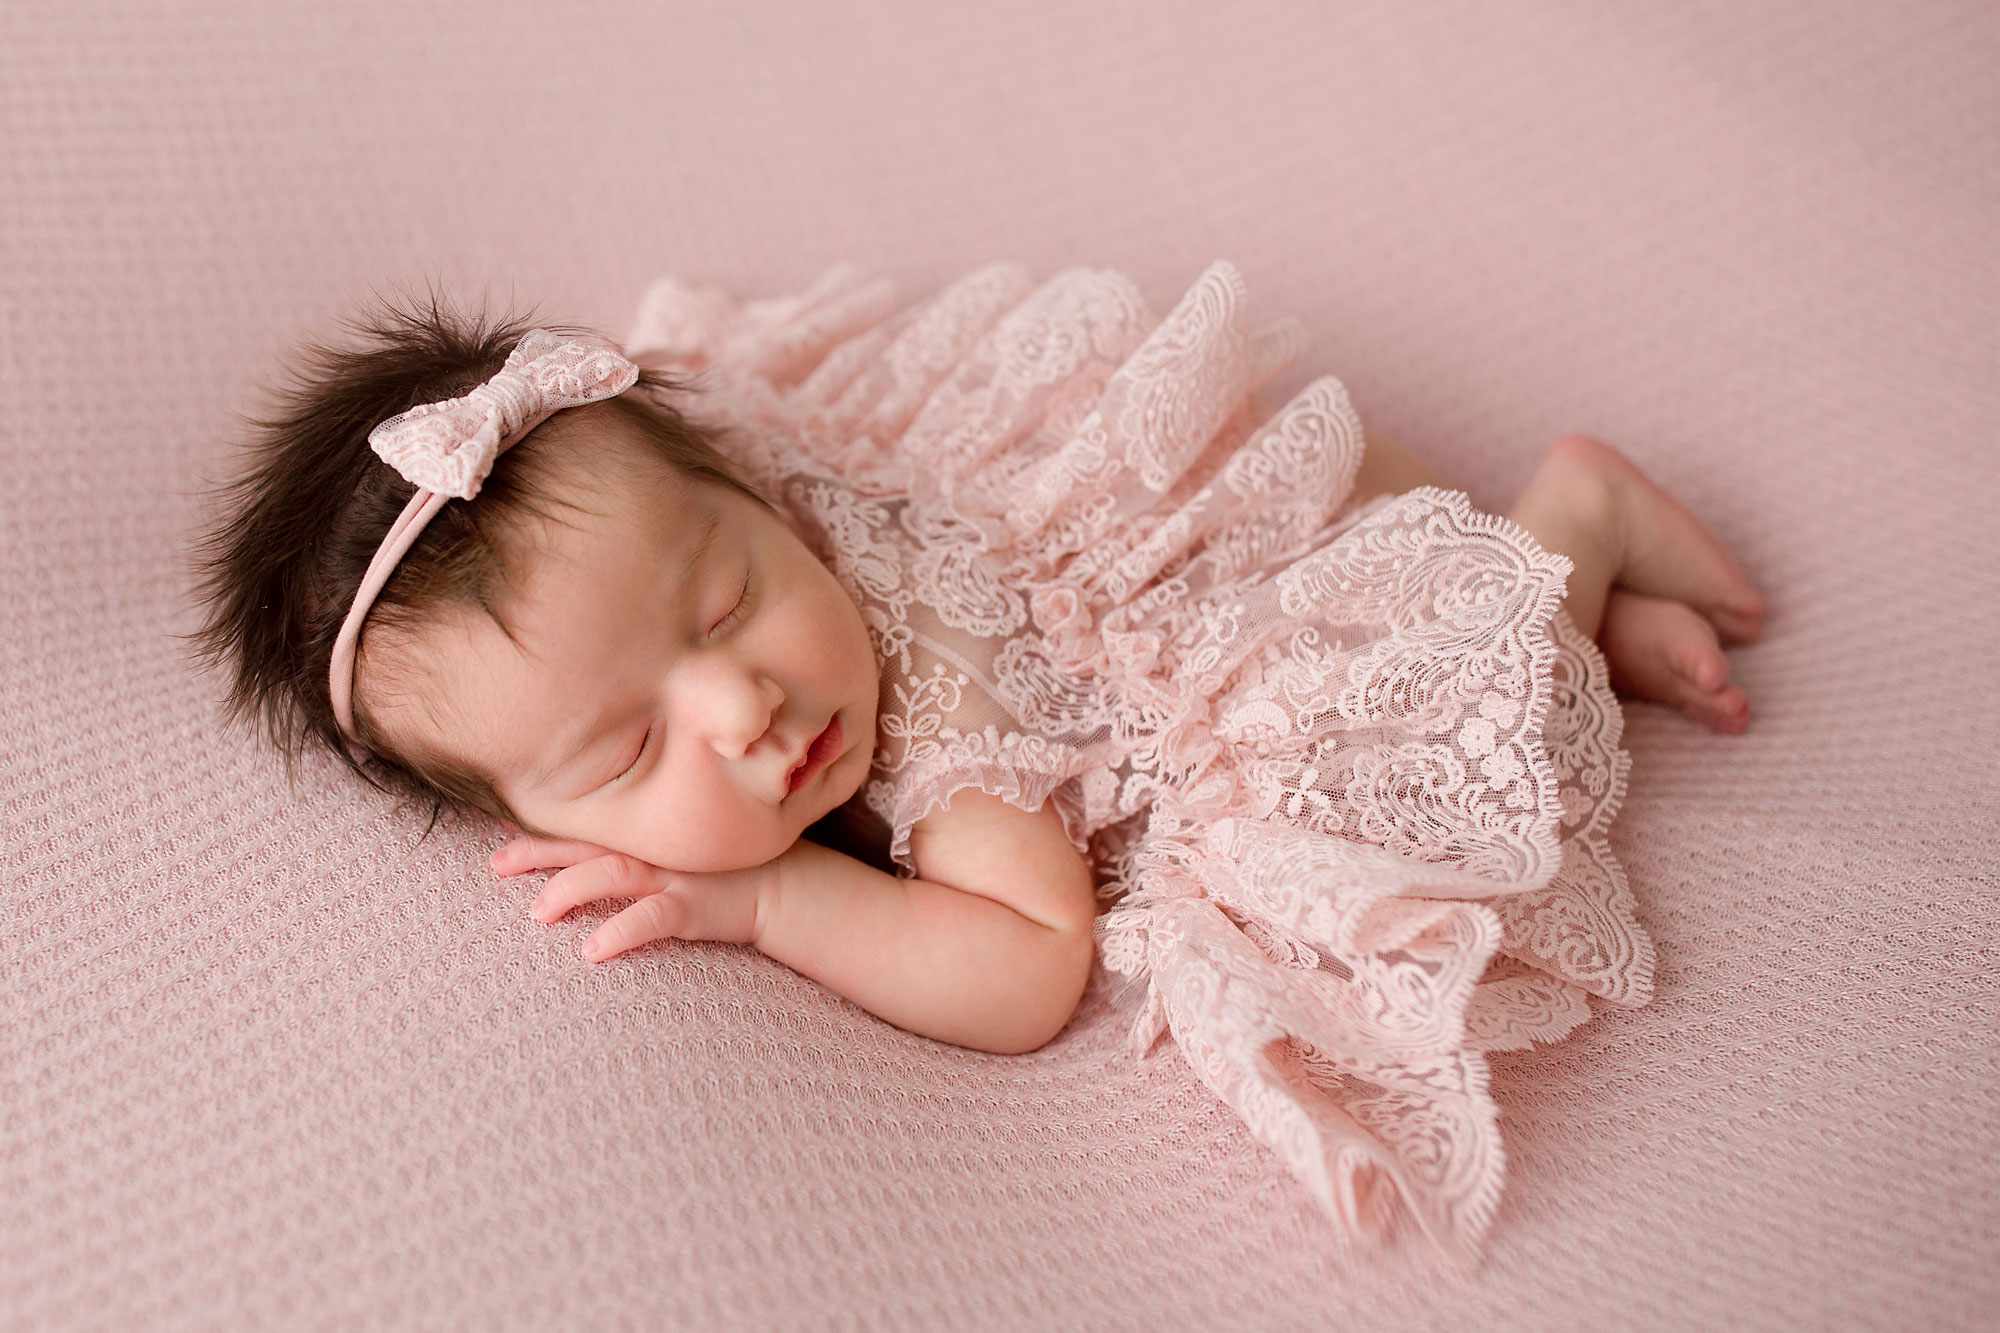 NJ newborn photographer capturing baby girl sleeping on a pink blanket